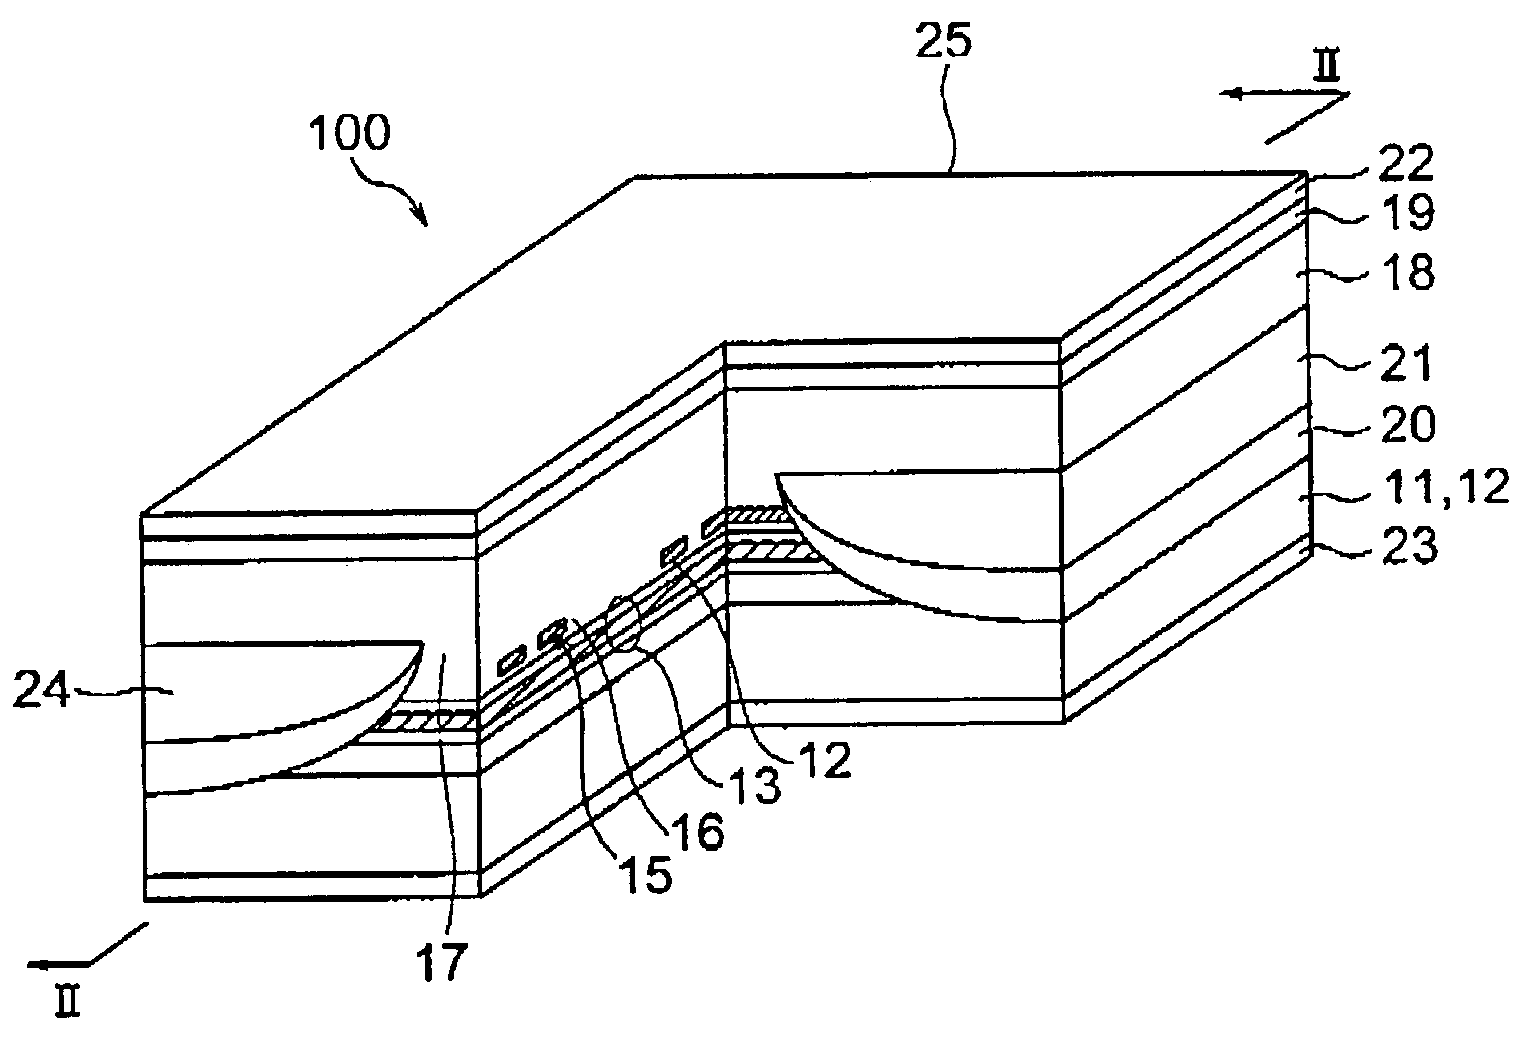 DFB semiconductor laser device having ununiform arrangement of a diffraction grating